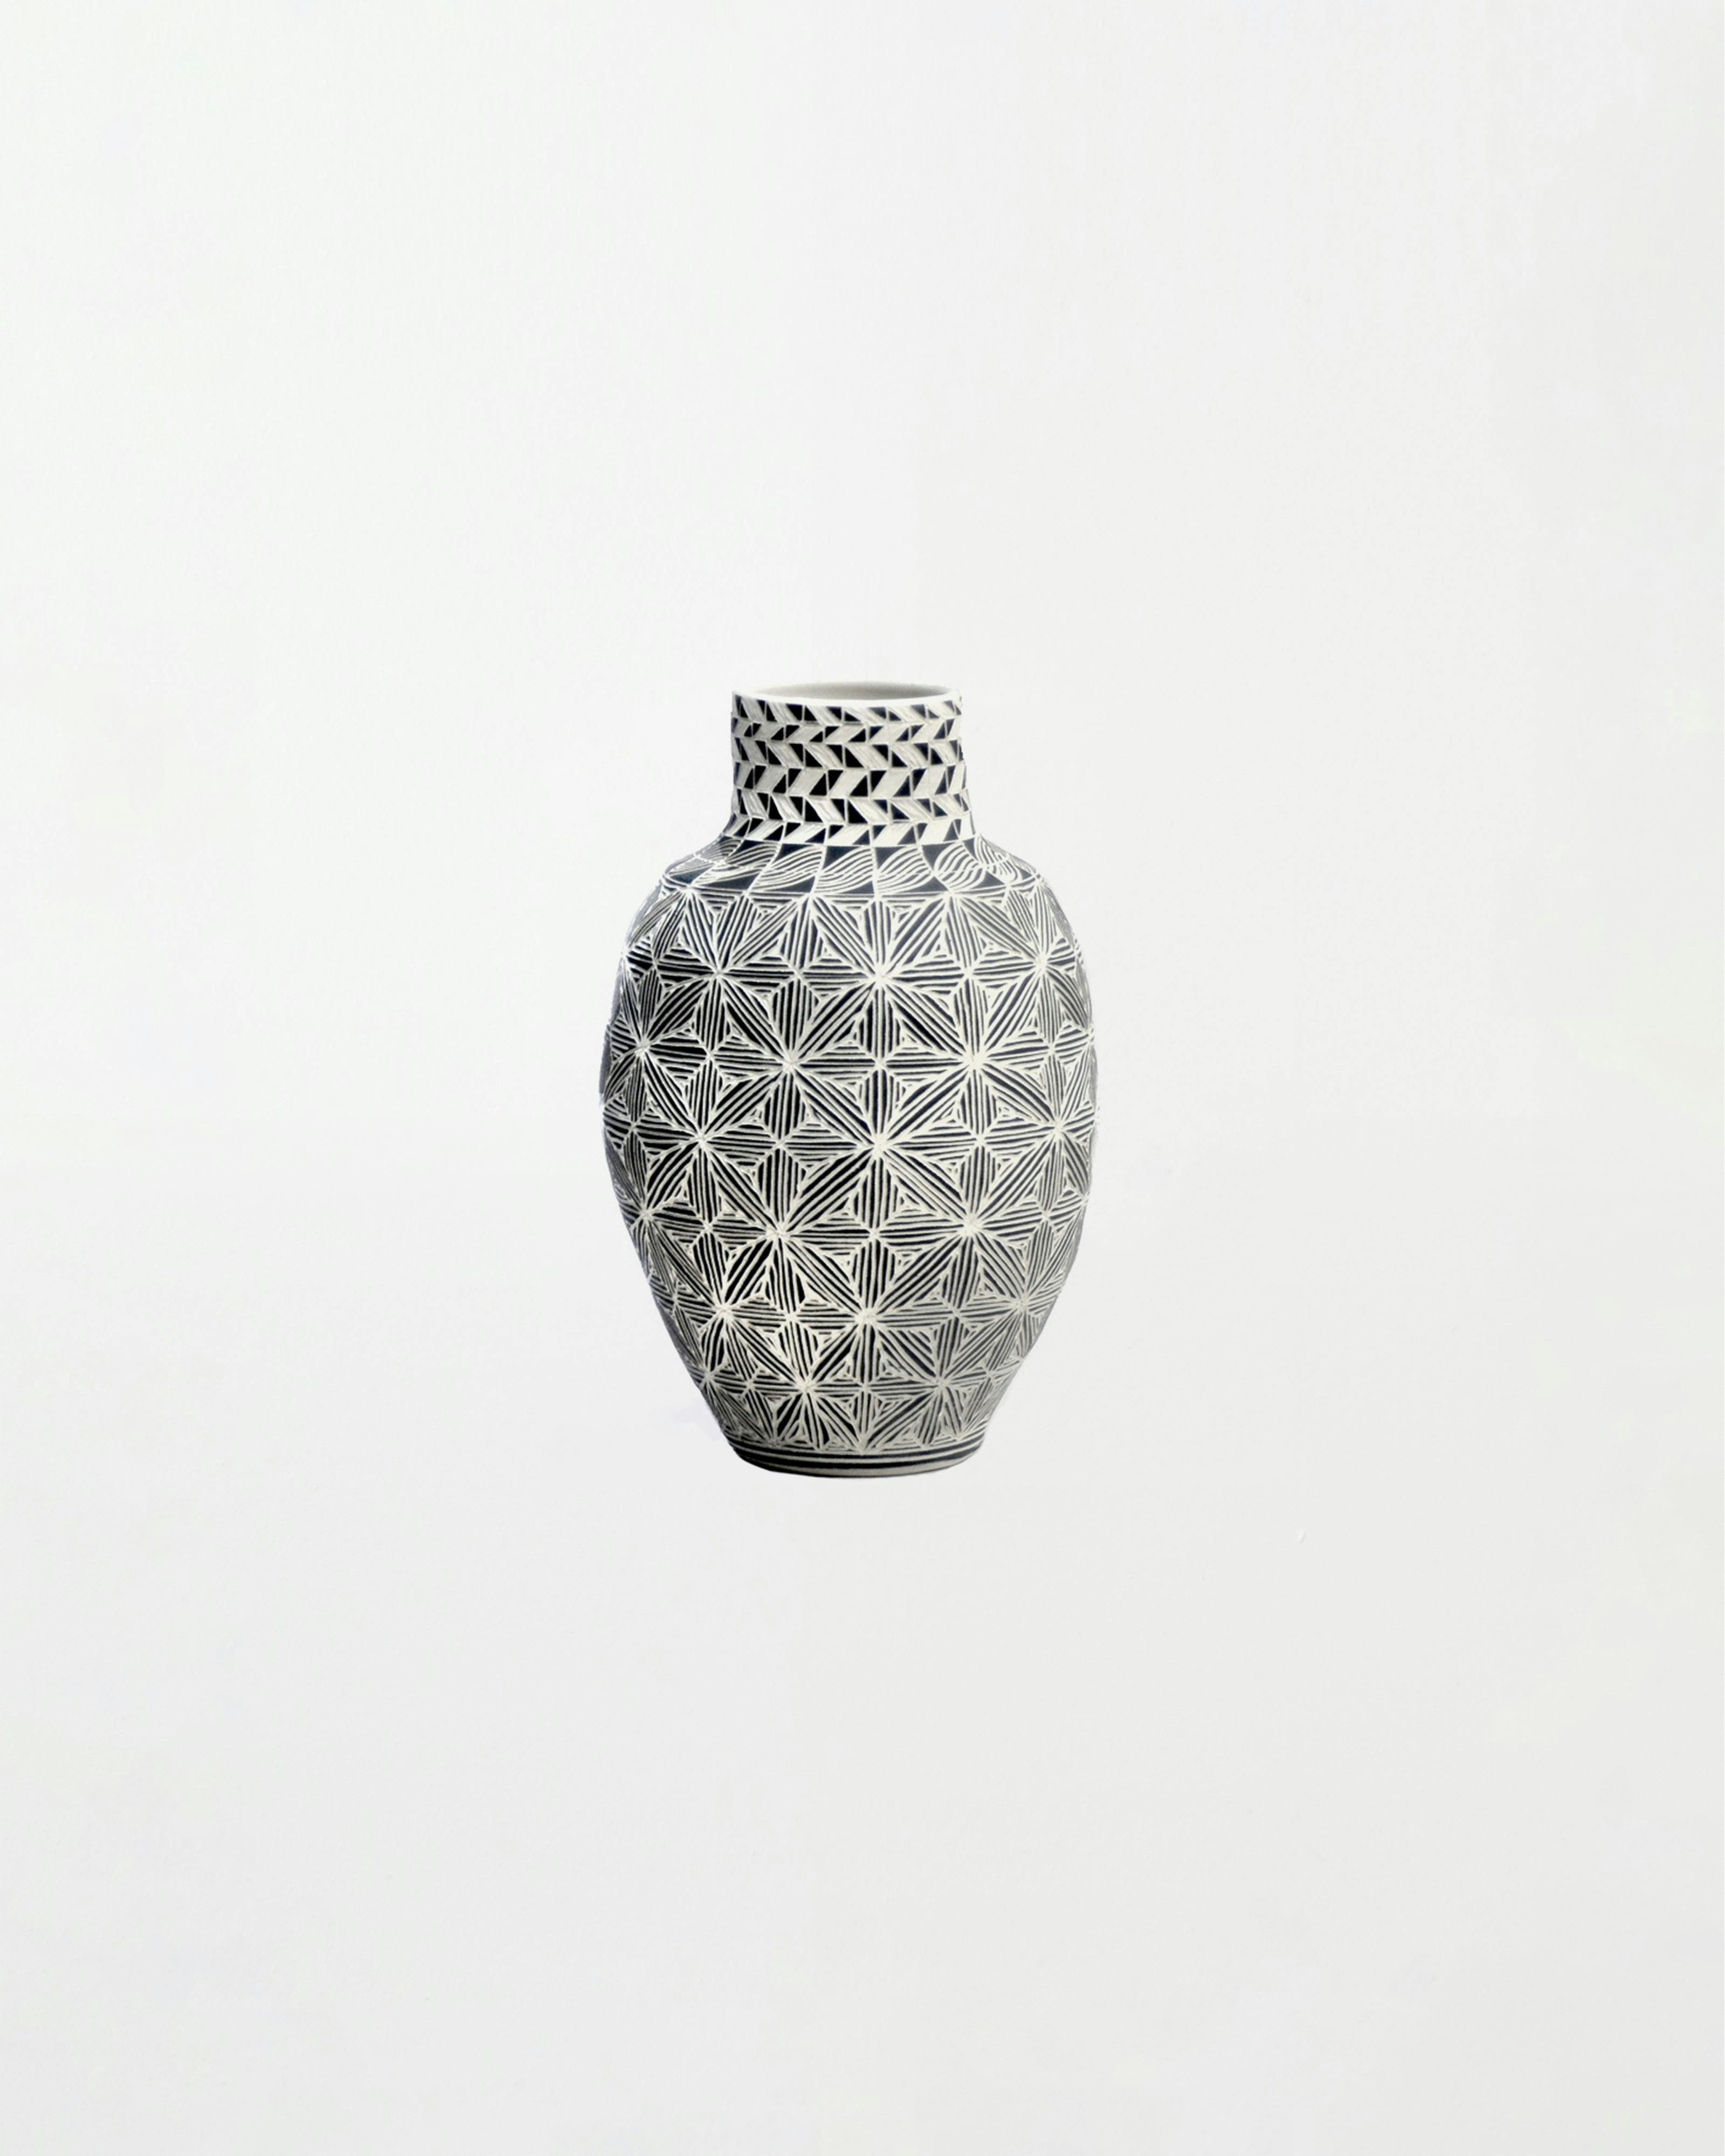 Sculpture by Dana Bechert titled "Big Fineline Vase".